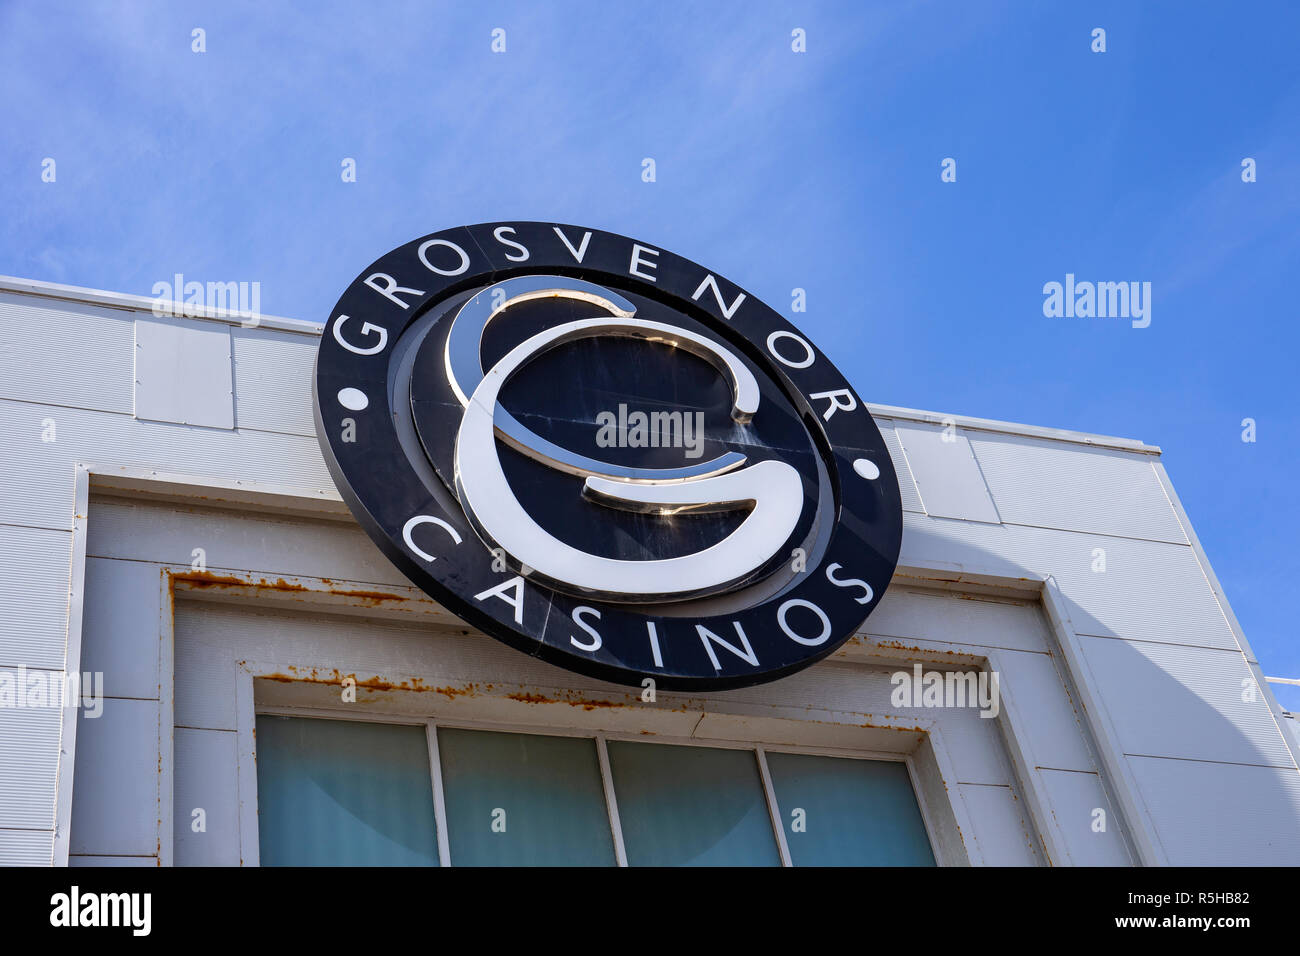 Grosvenor casinos signo en pared exterior UK Foto de stock